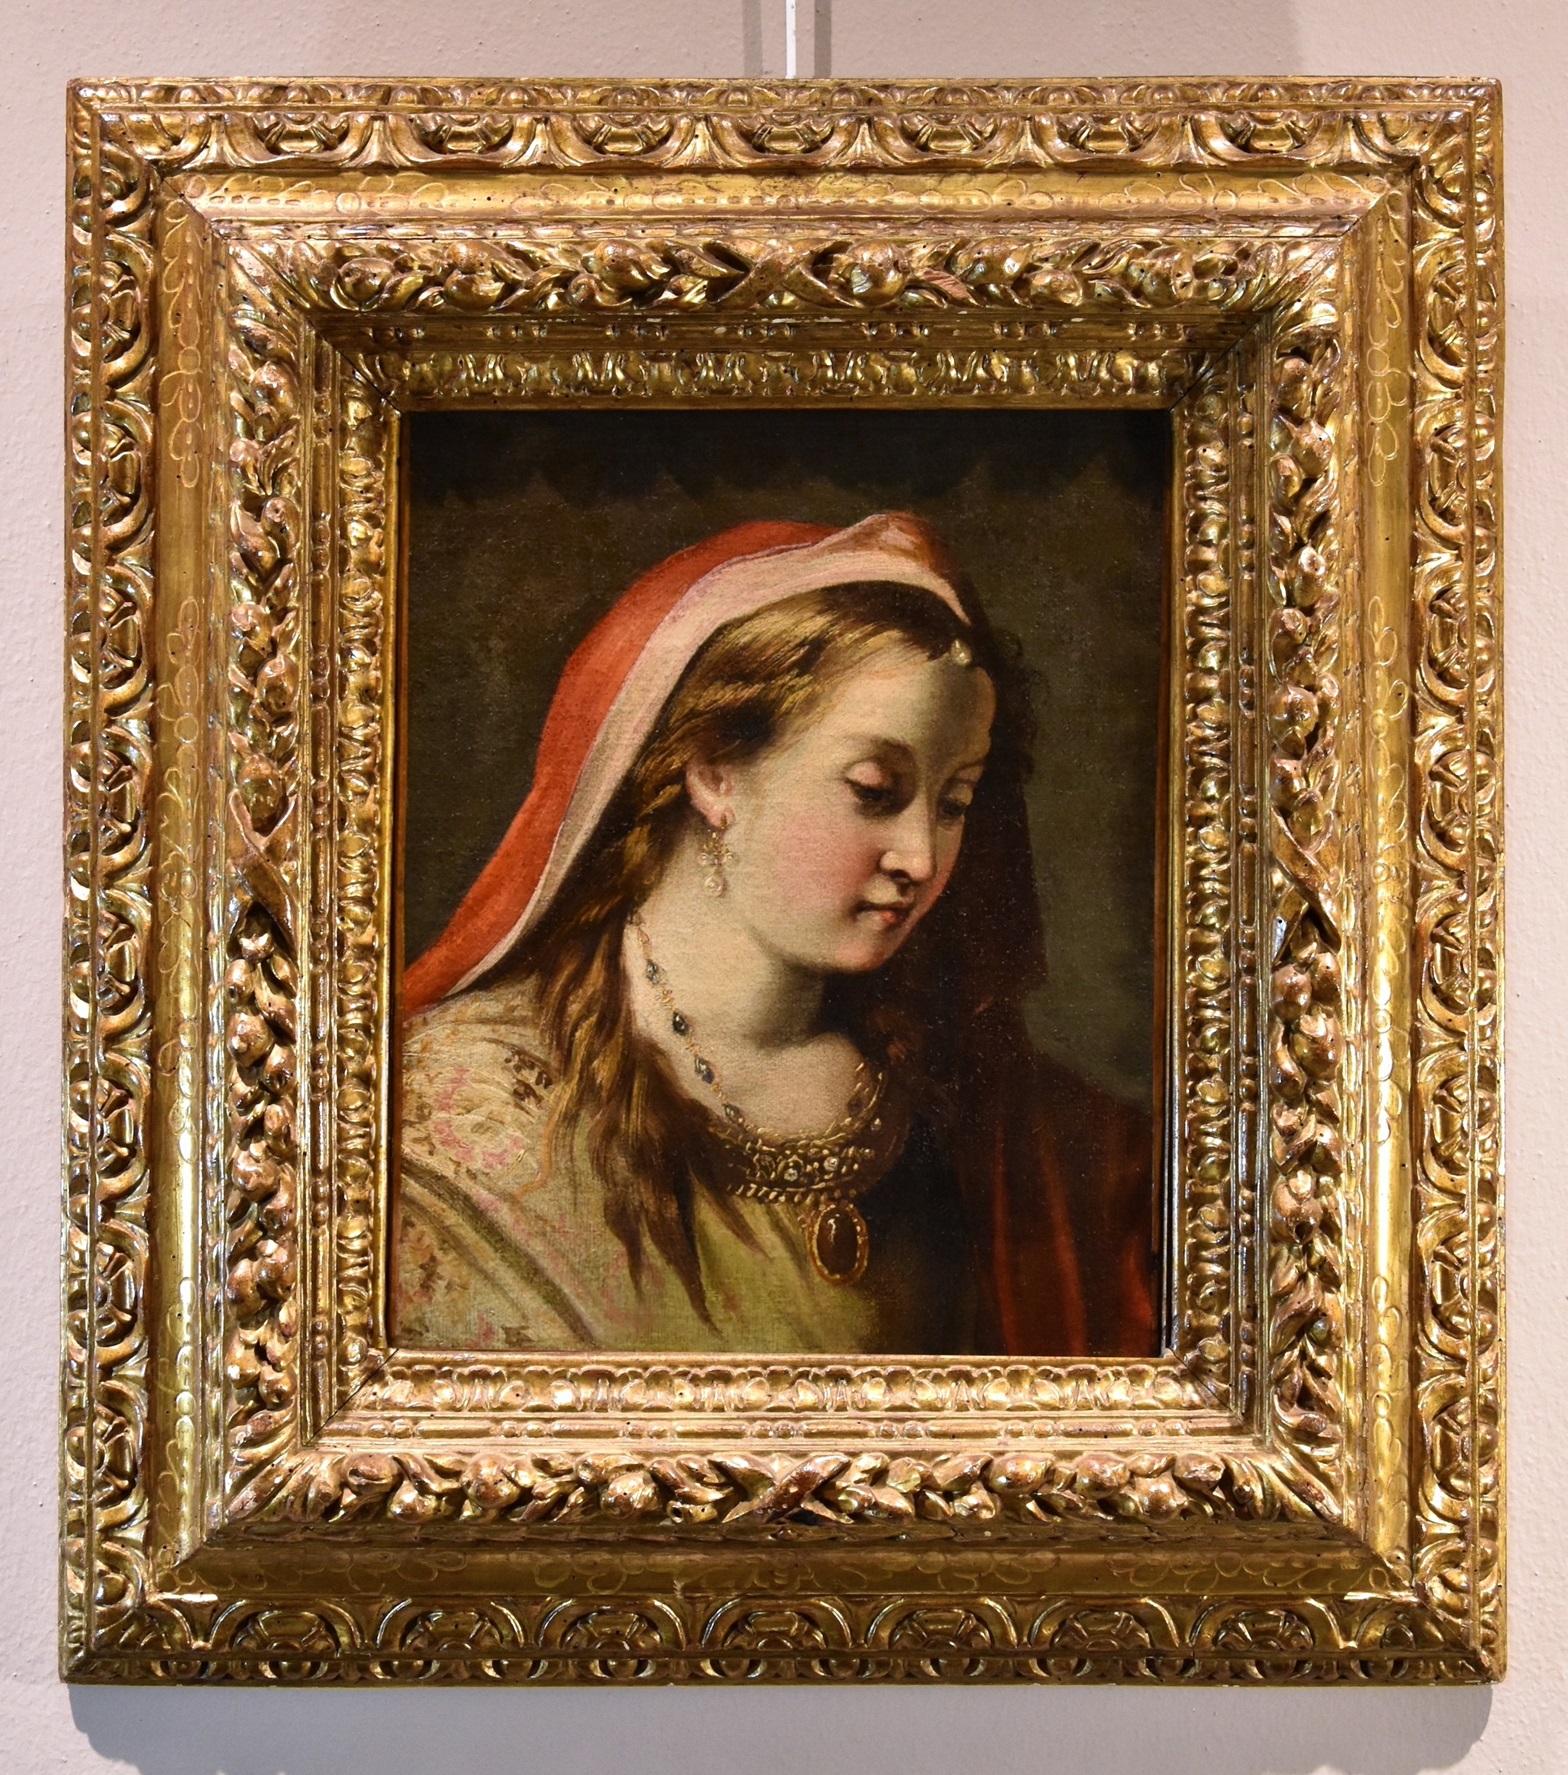 Portrait Woman Princess Diziani Paint 18th Century Oil on canvas Old master Art - Painting by Gaspare Diziani (belluno 1689 - Venice 1767)